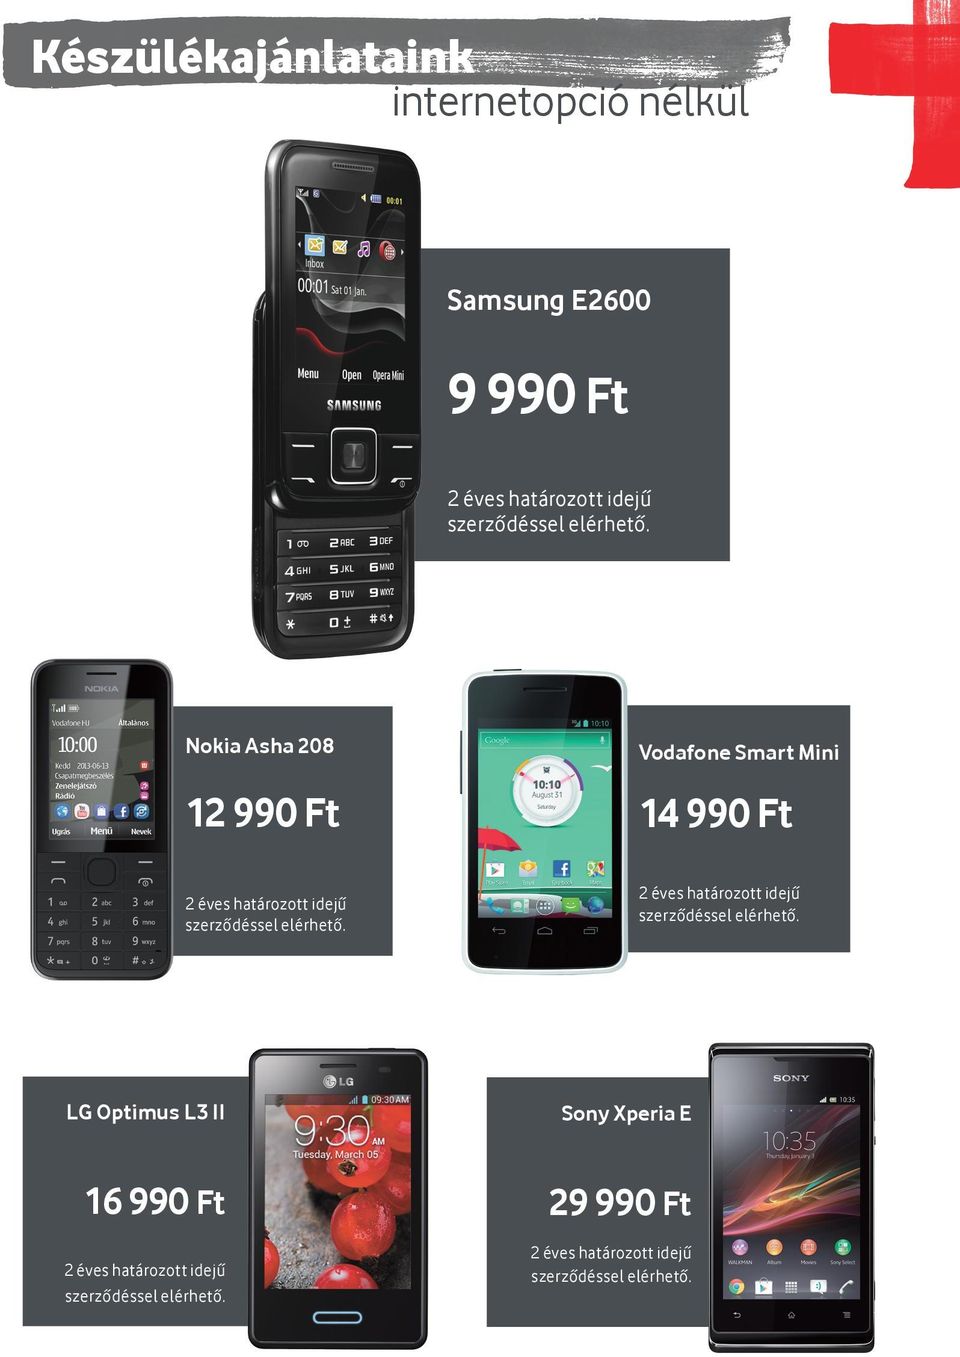 Nokia Asha 208 12 990 Ft Vodafone Smart Mini 14 990 Ft   LG Optimus L3